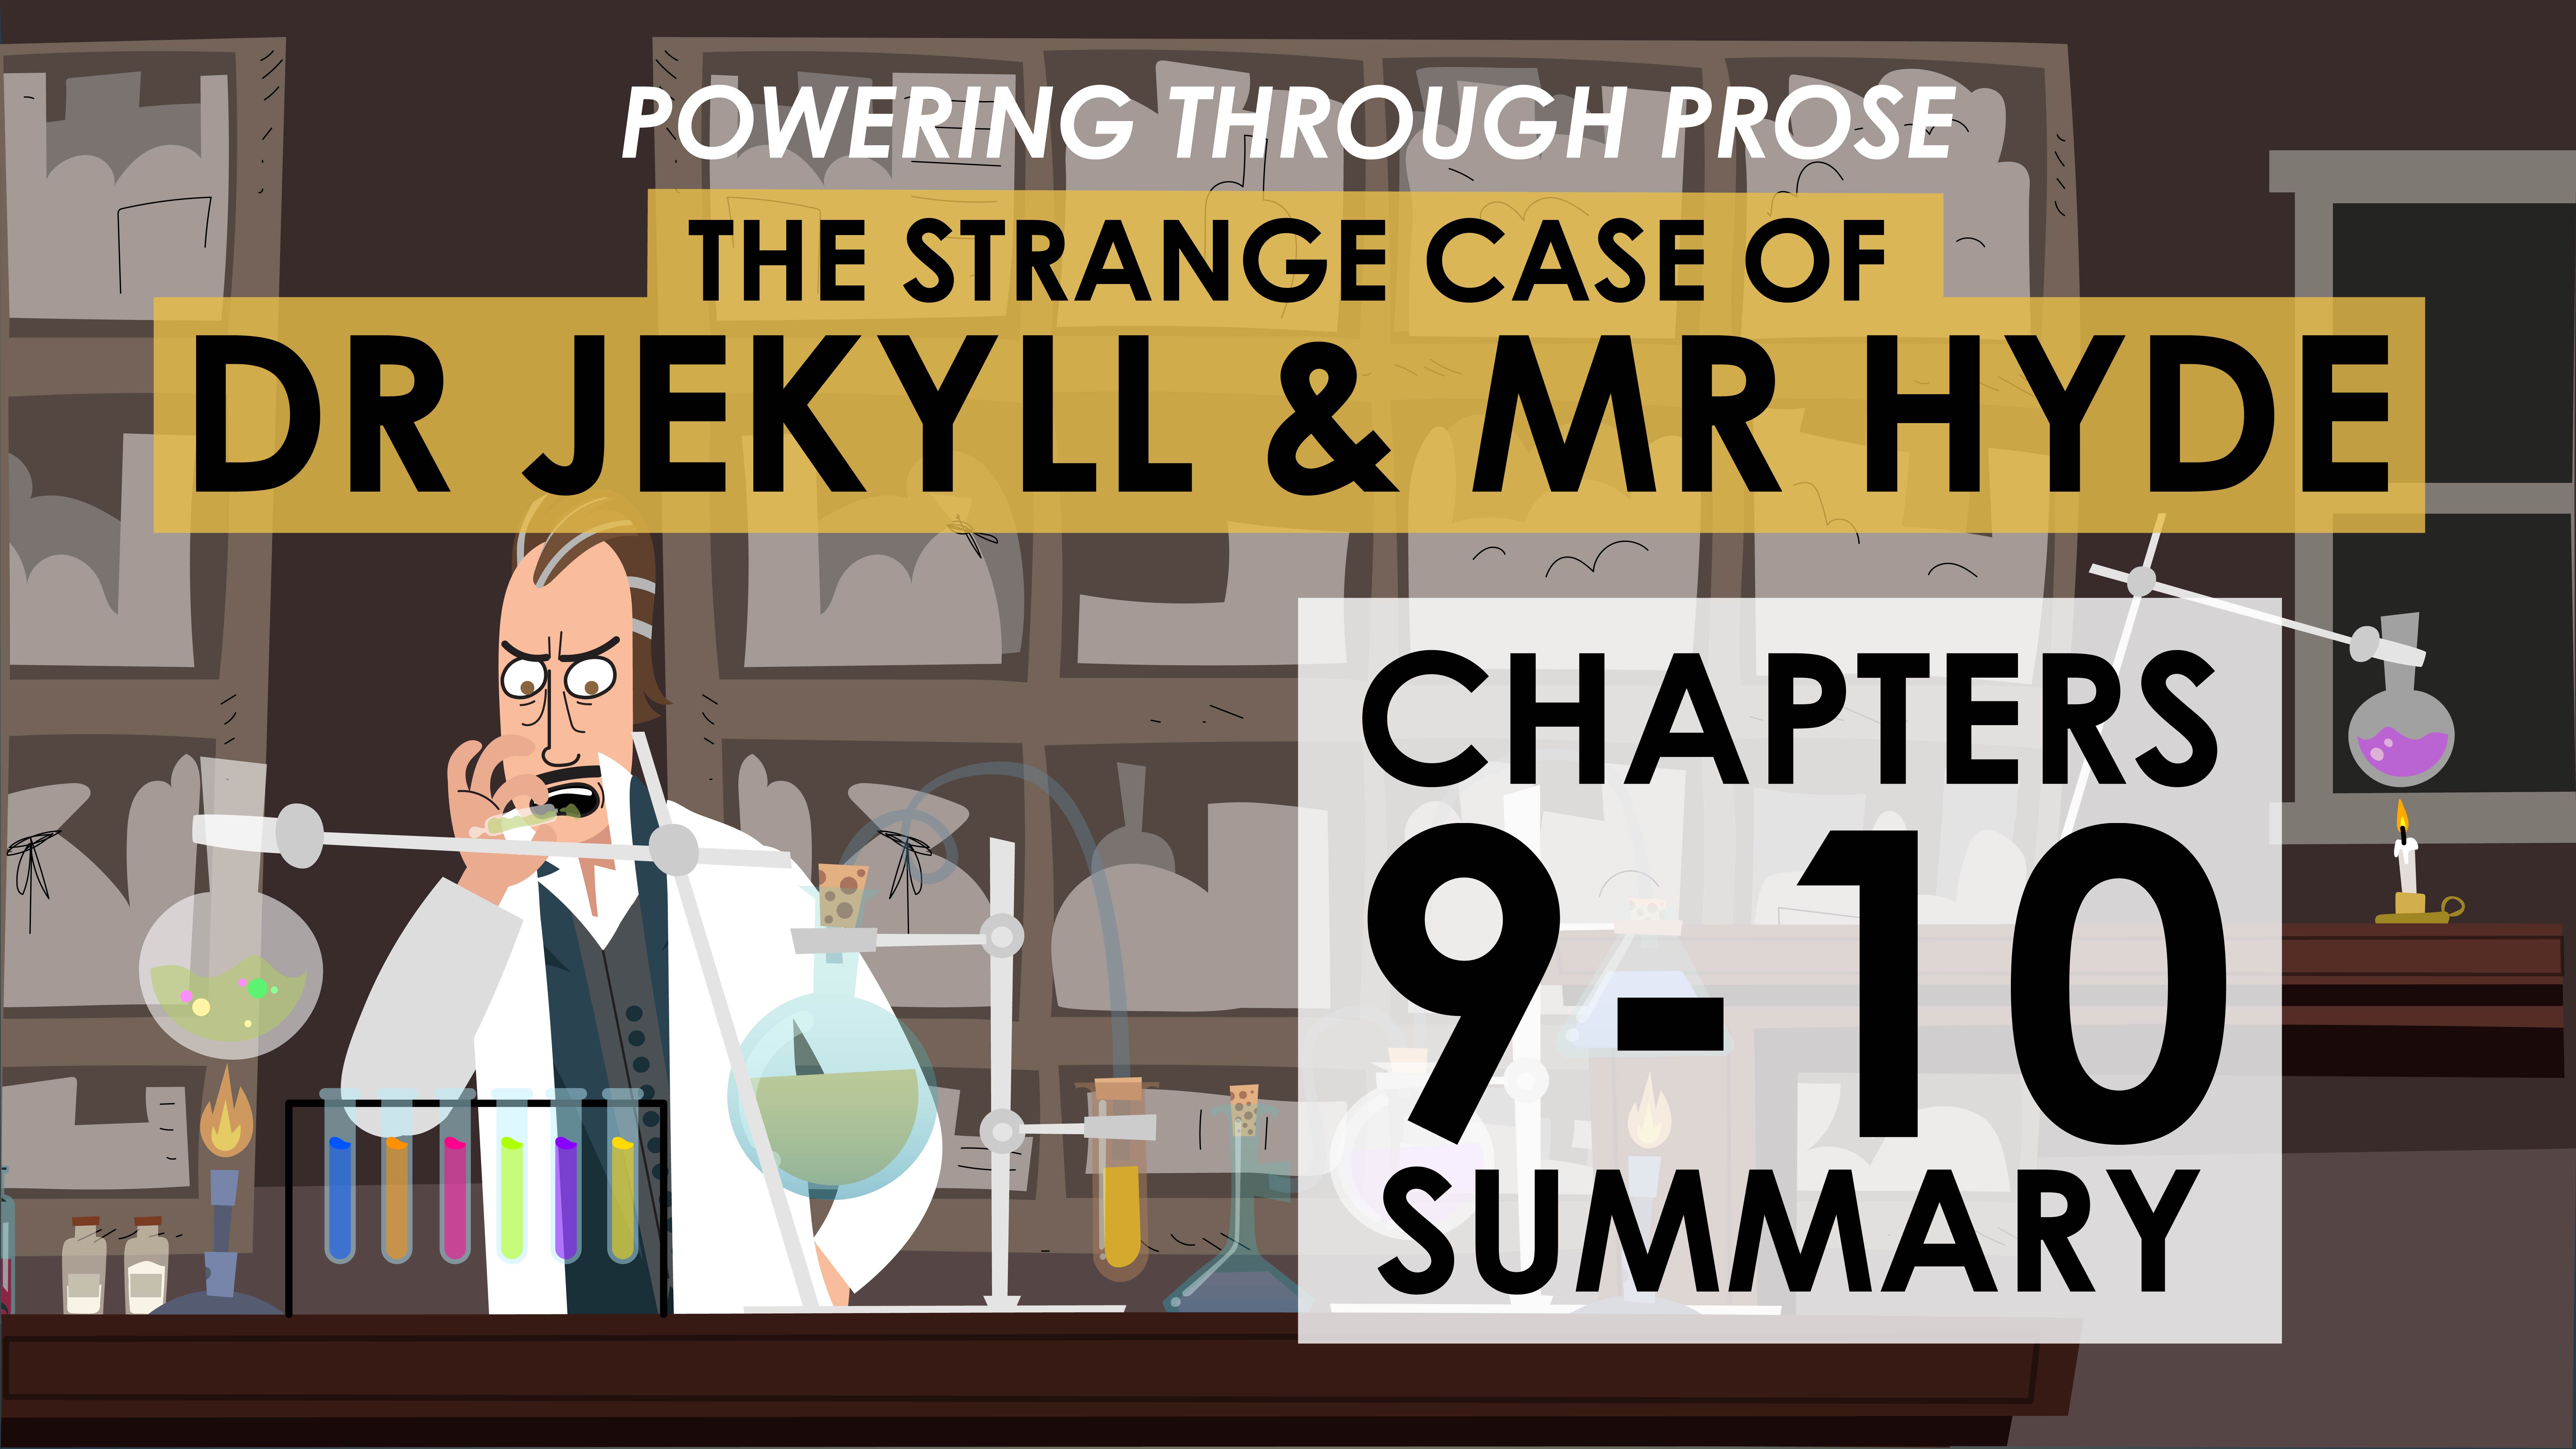 The Strange Case of Dr Jekyll & Mr Hyde - Robert Louis Stevenson - Chapters 9-10 Summary - Powering Through Prose Series